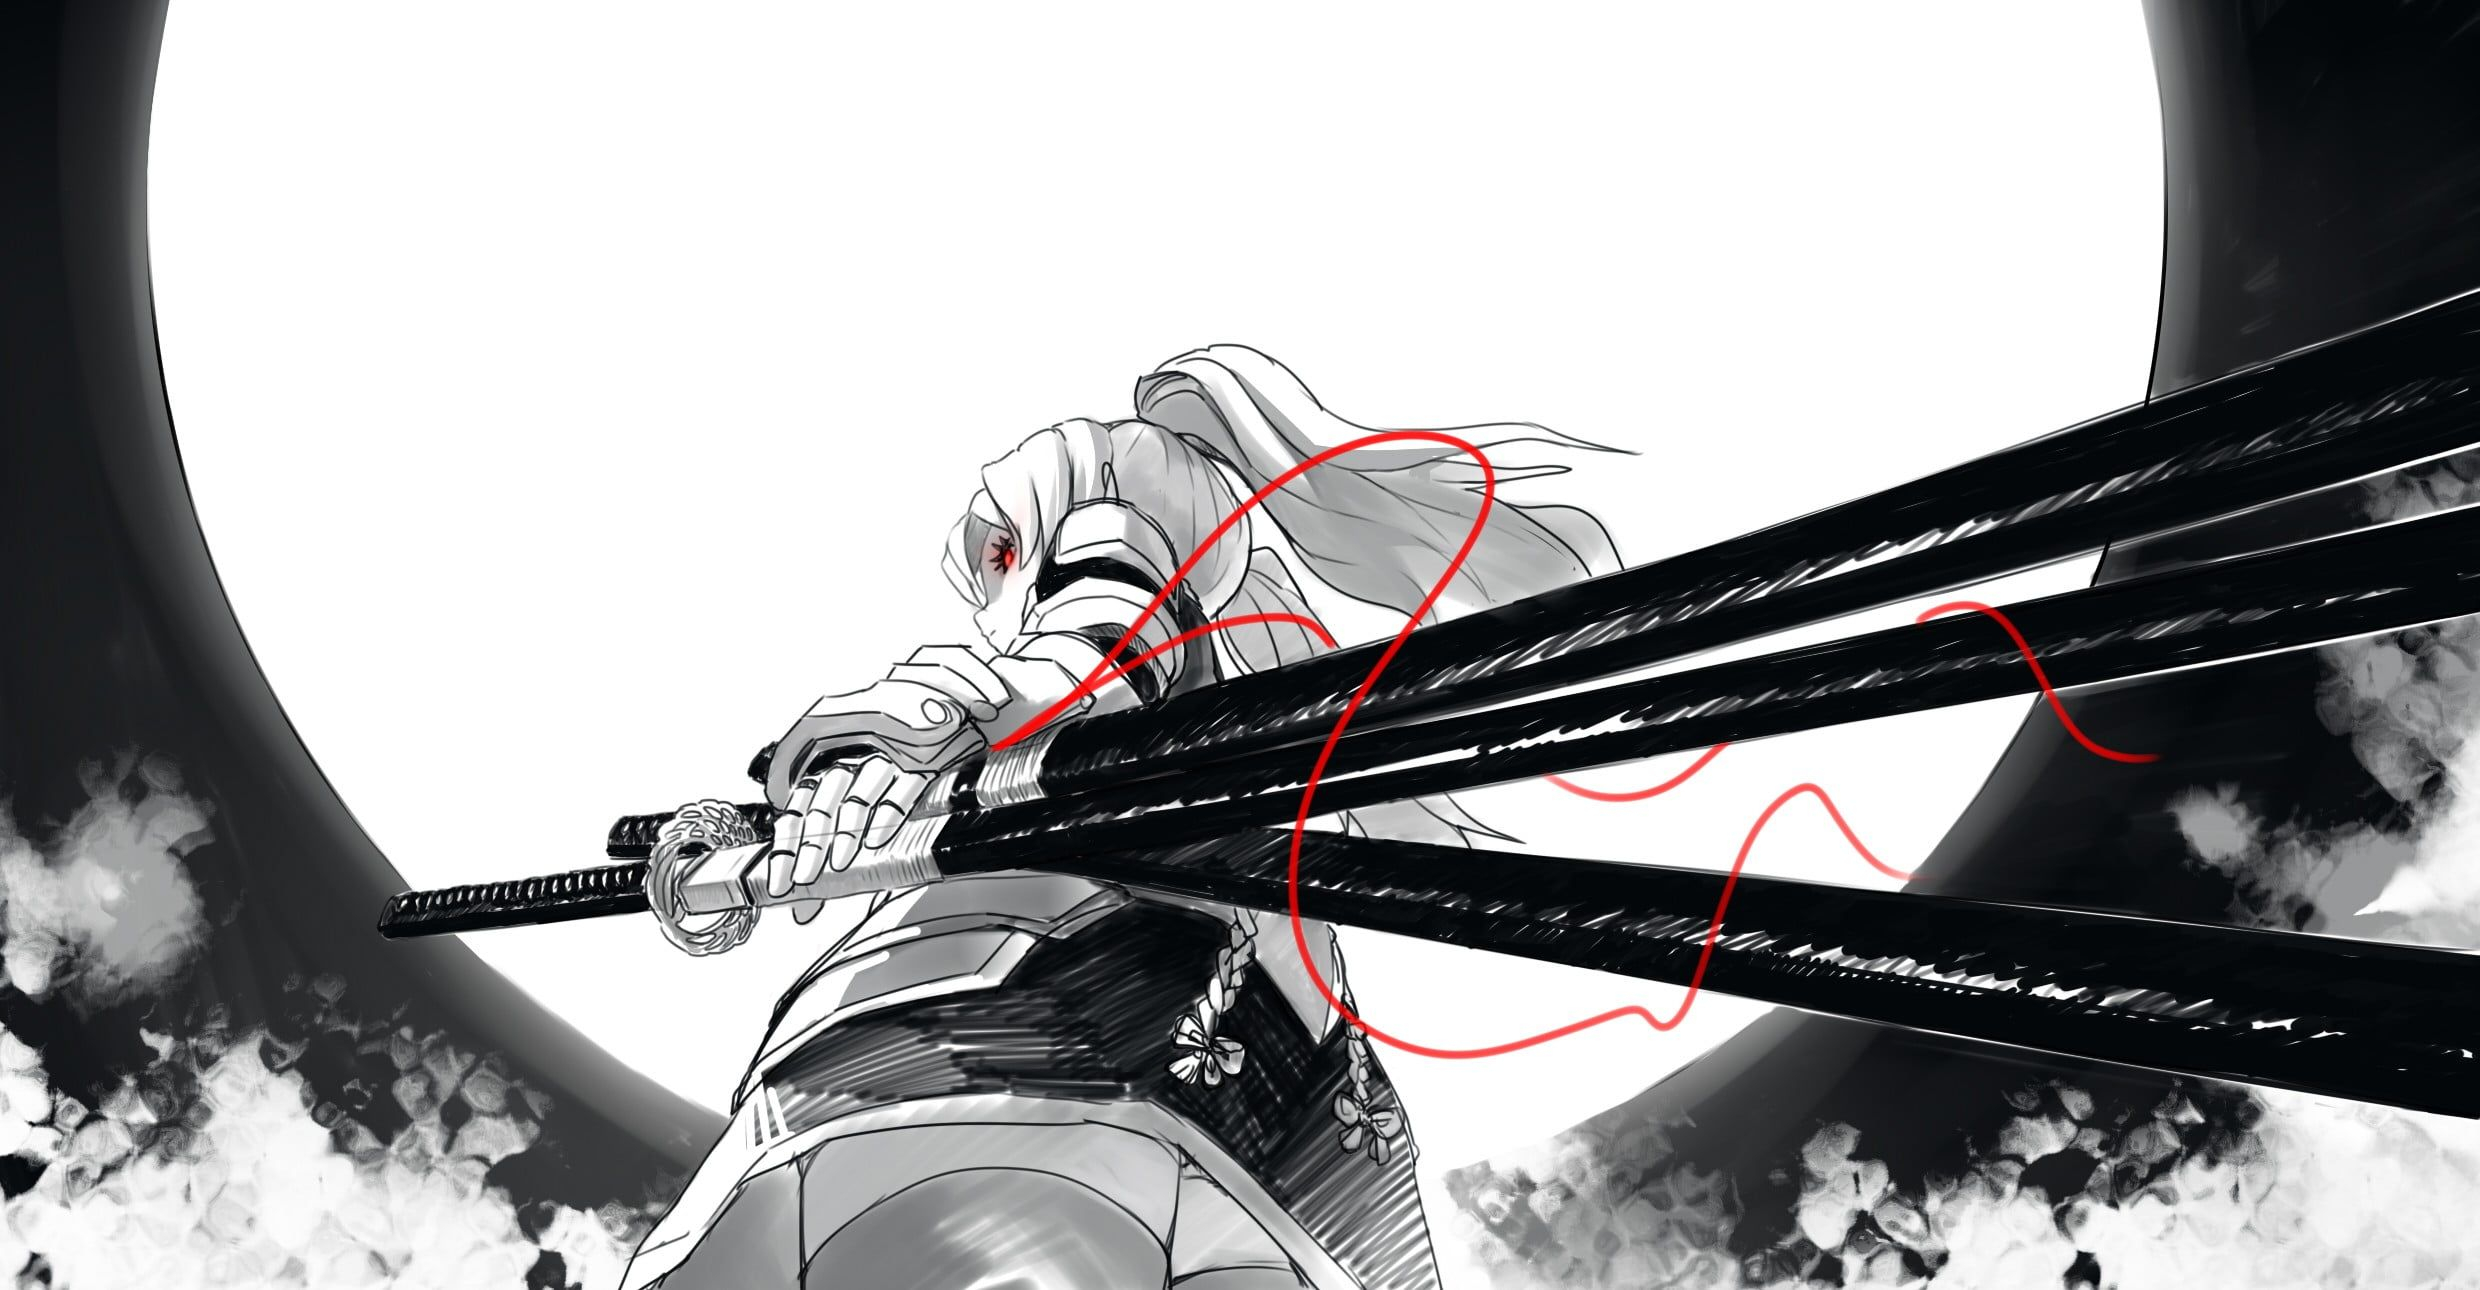 2480x1290 female anime character holding swords digital wallpaper #drawing digital art #samurai #sword #katana #dark #anime selective&acirc;&#128;&brvbar; | Samurai wallpaper, Katana, Dark anime